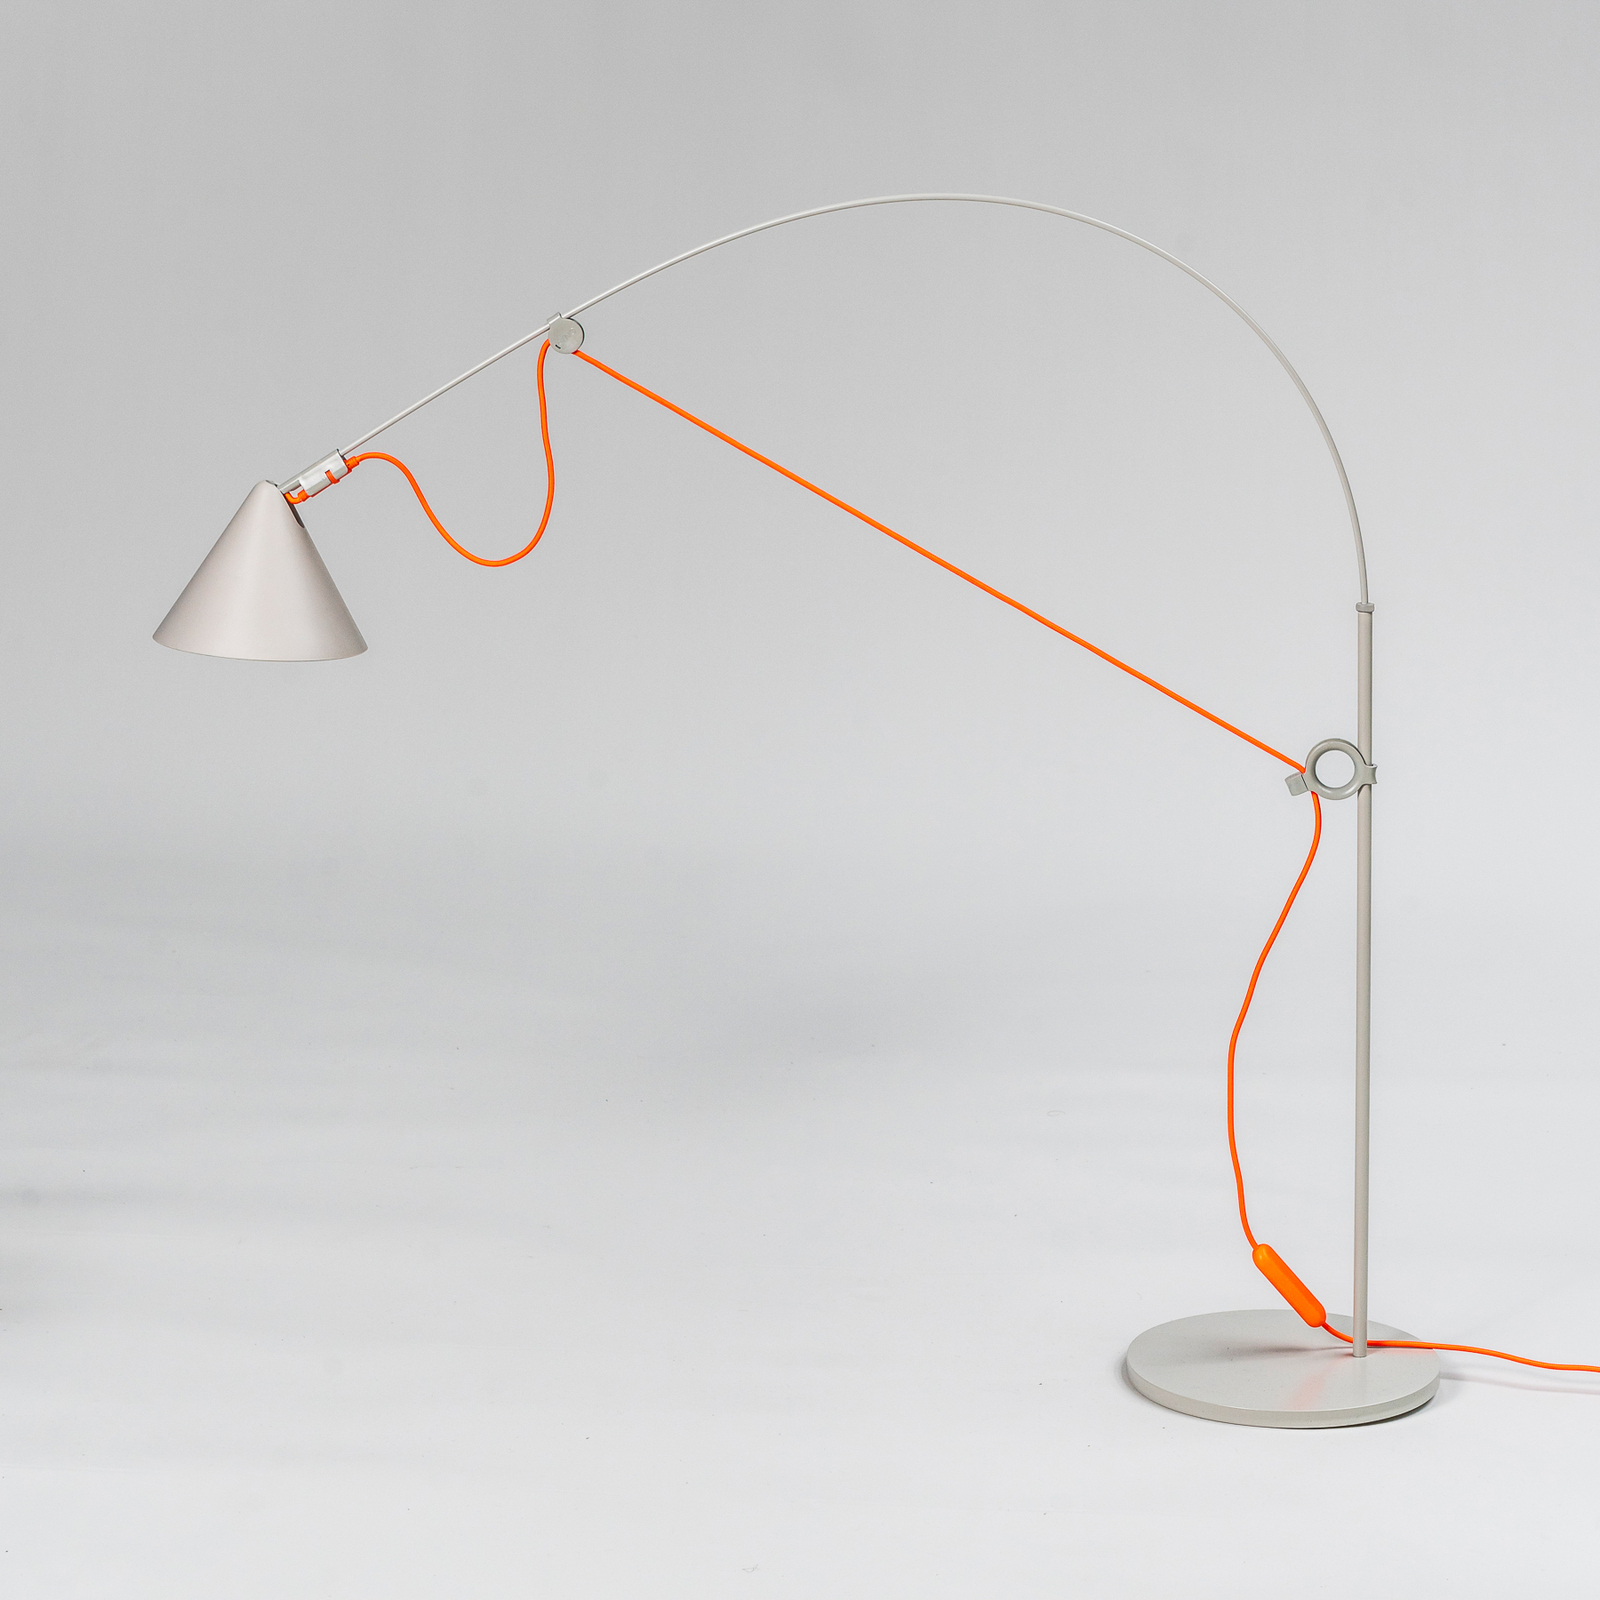 midgard AYNO S lampe de table grise/orange 3 000 K